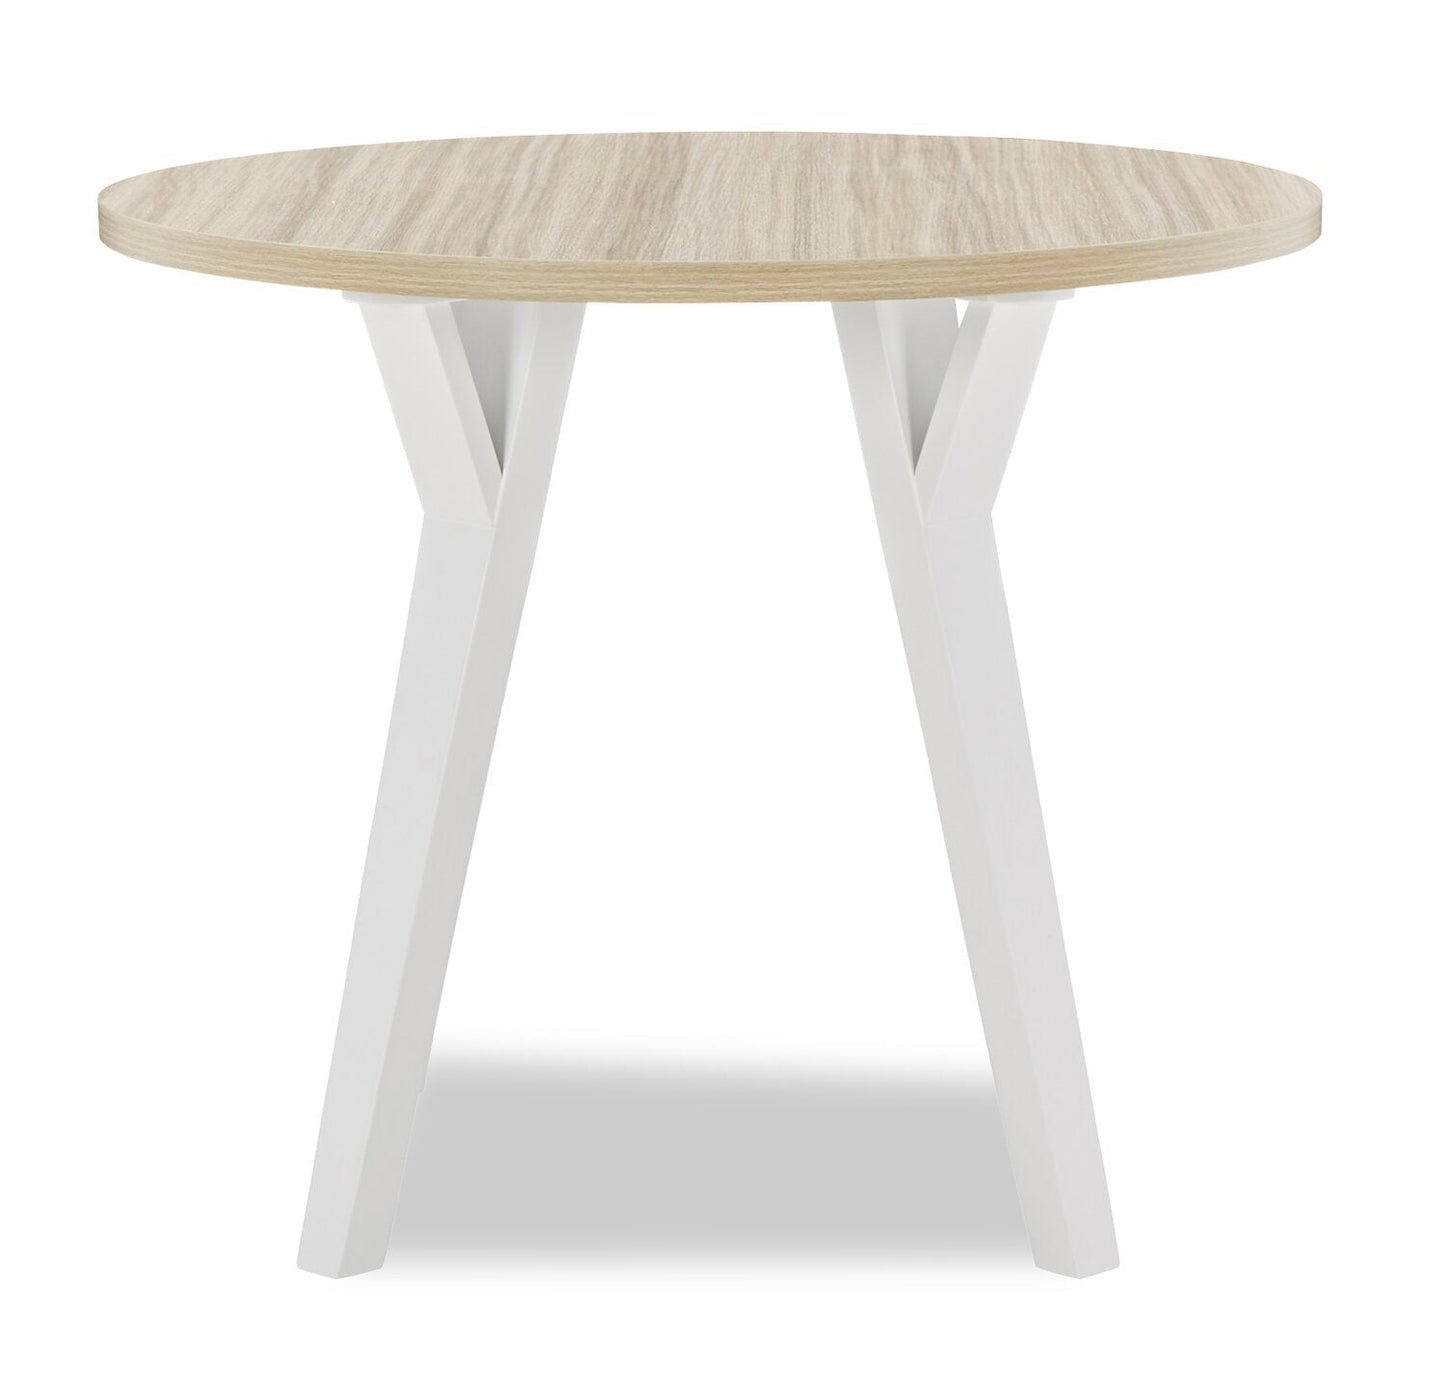 Telos Round Dining Table - White